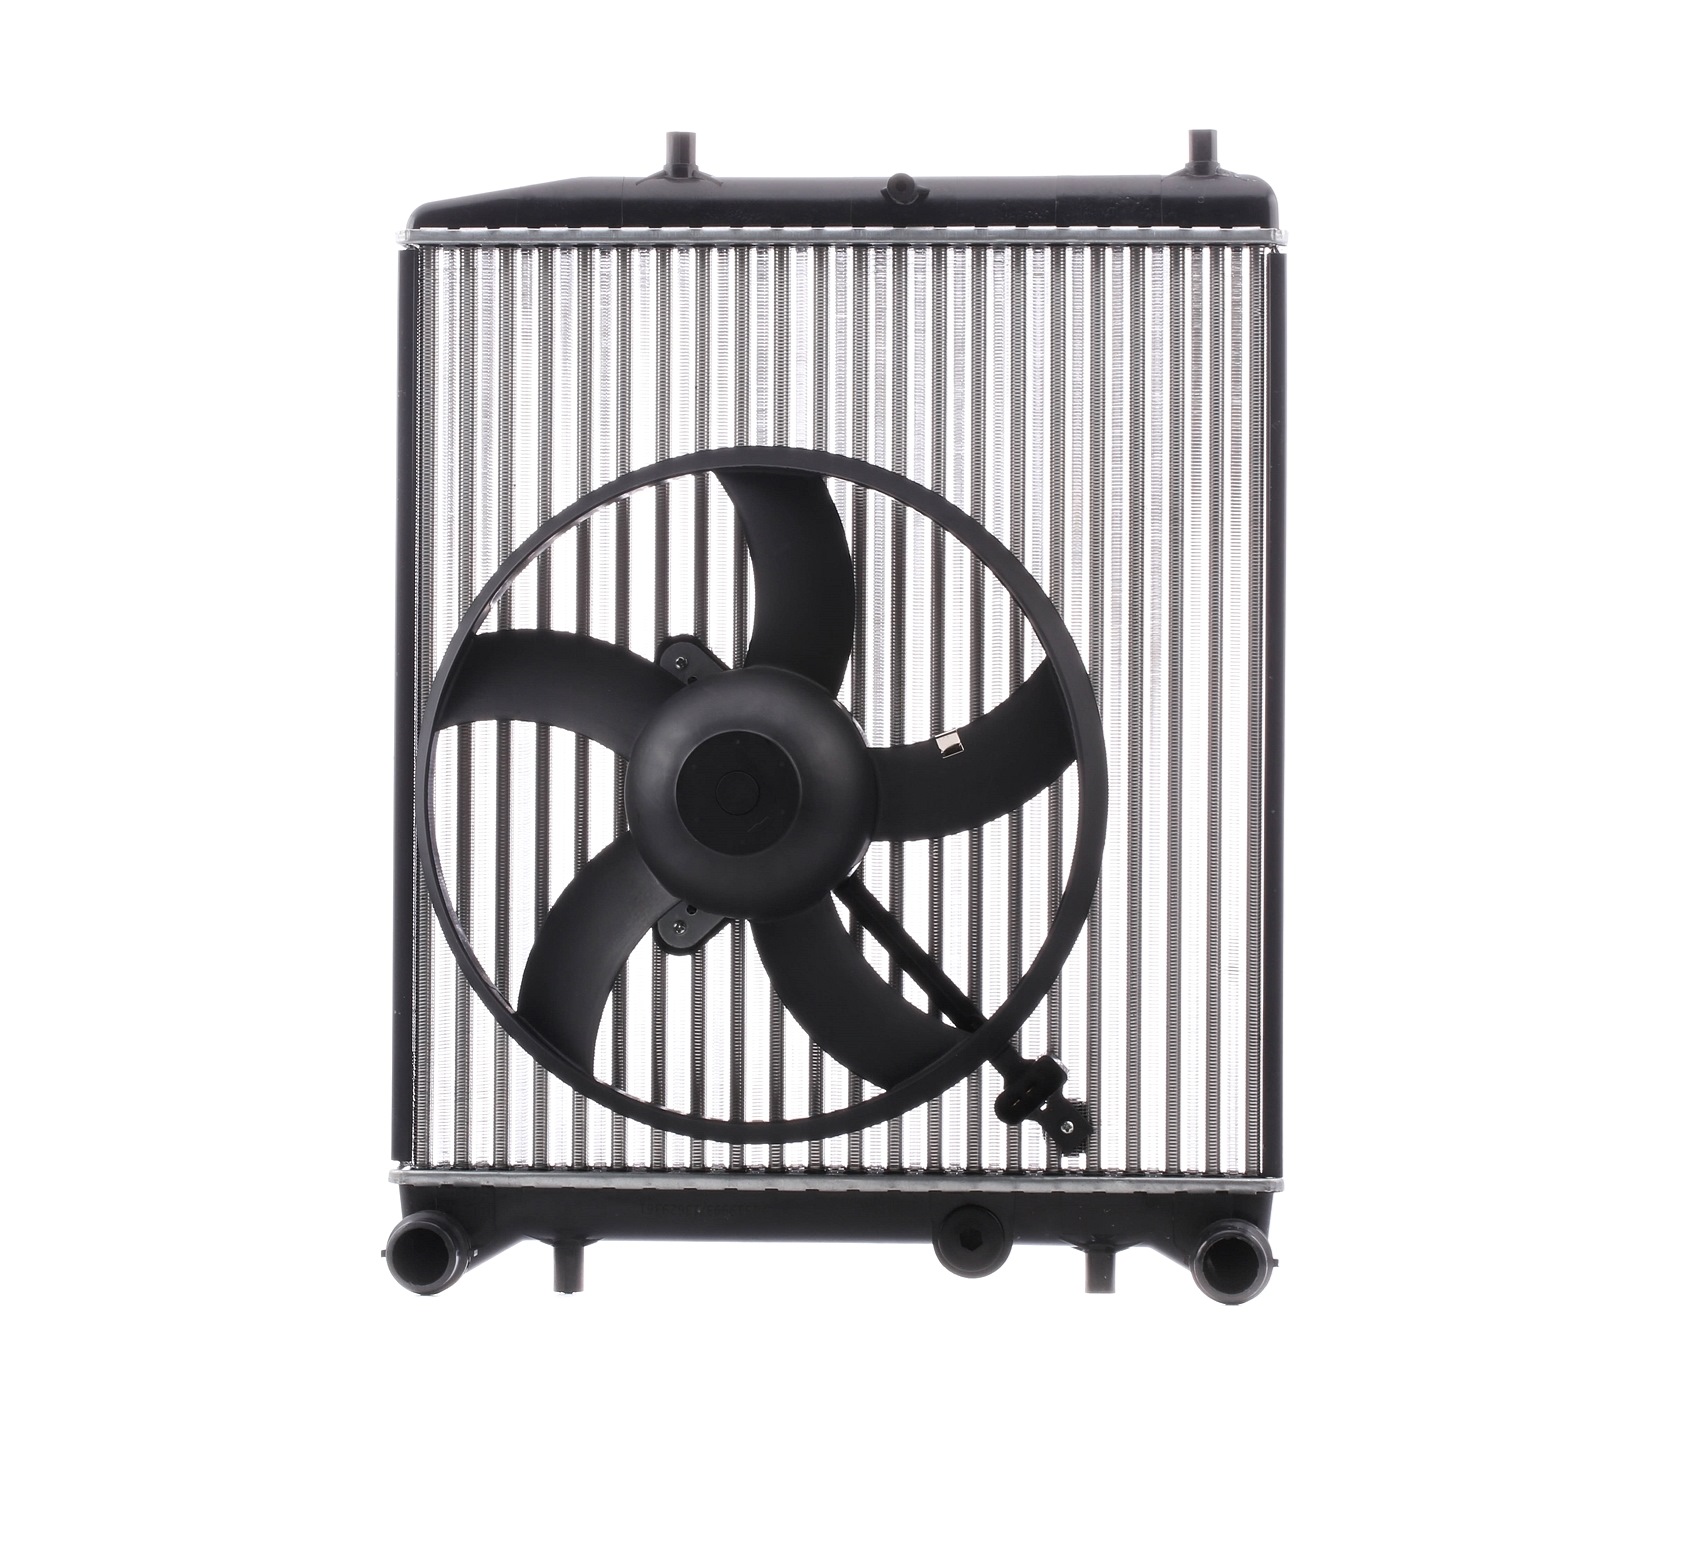 RIDEX 470R0410 Engine radiator Aluminium, Plastic, for vehicles without air conditioning, Manual Transmission